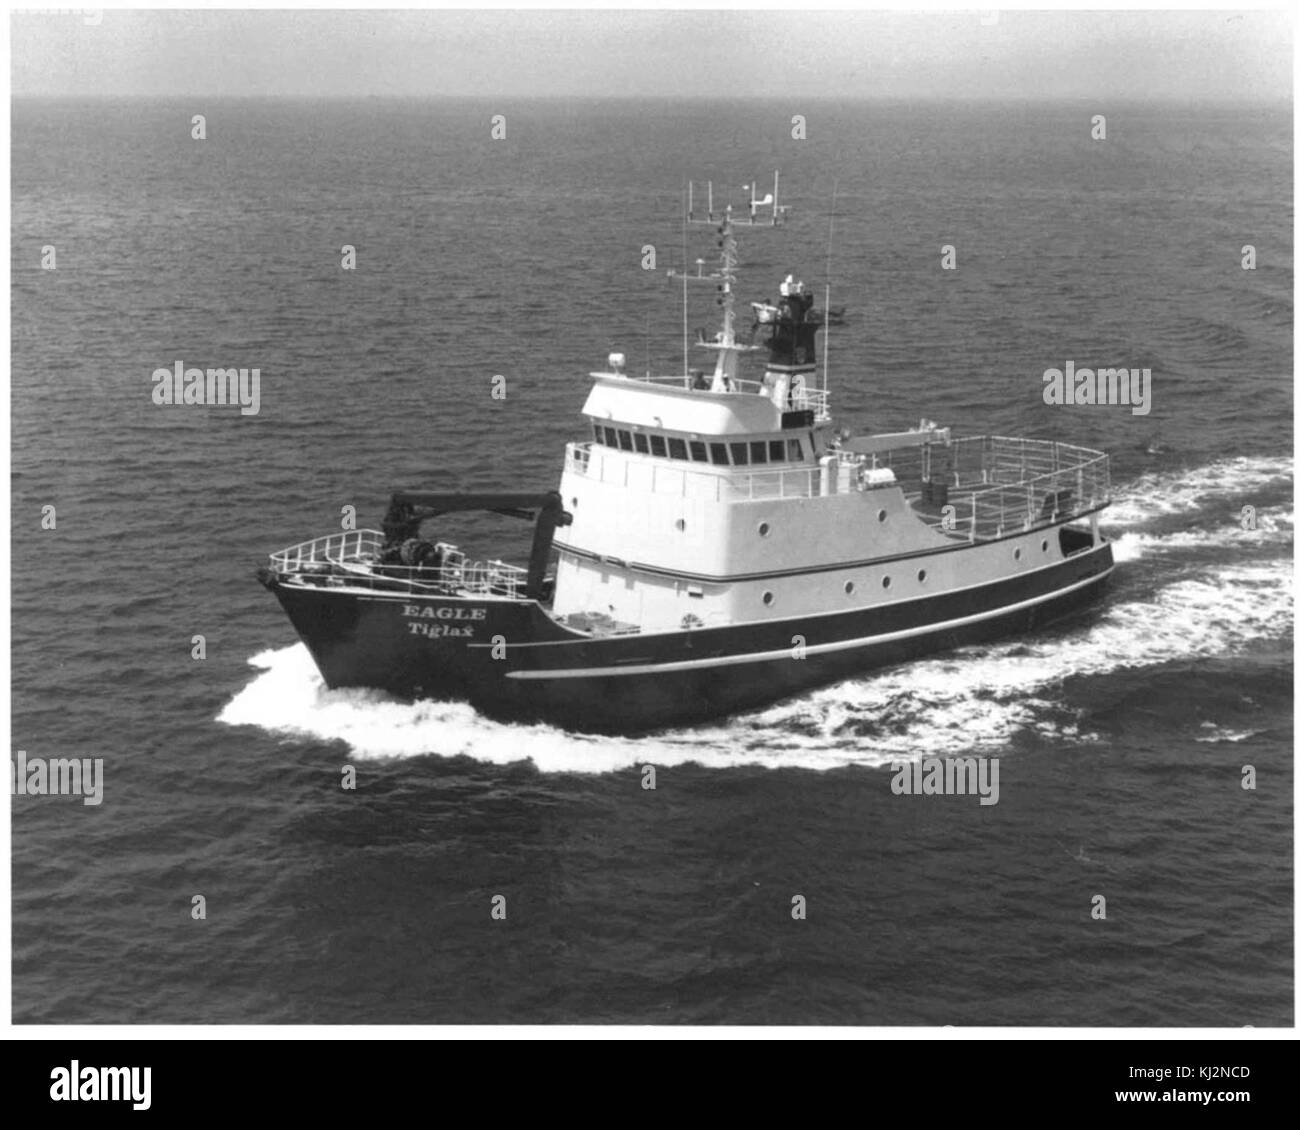 La nave di ricerca barca fotografia vintage Foto Stock